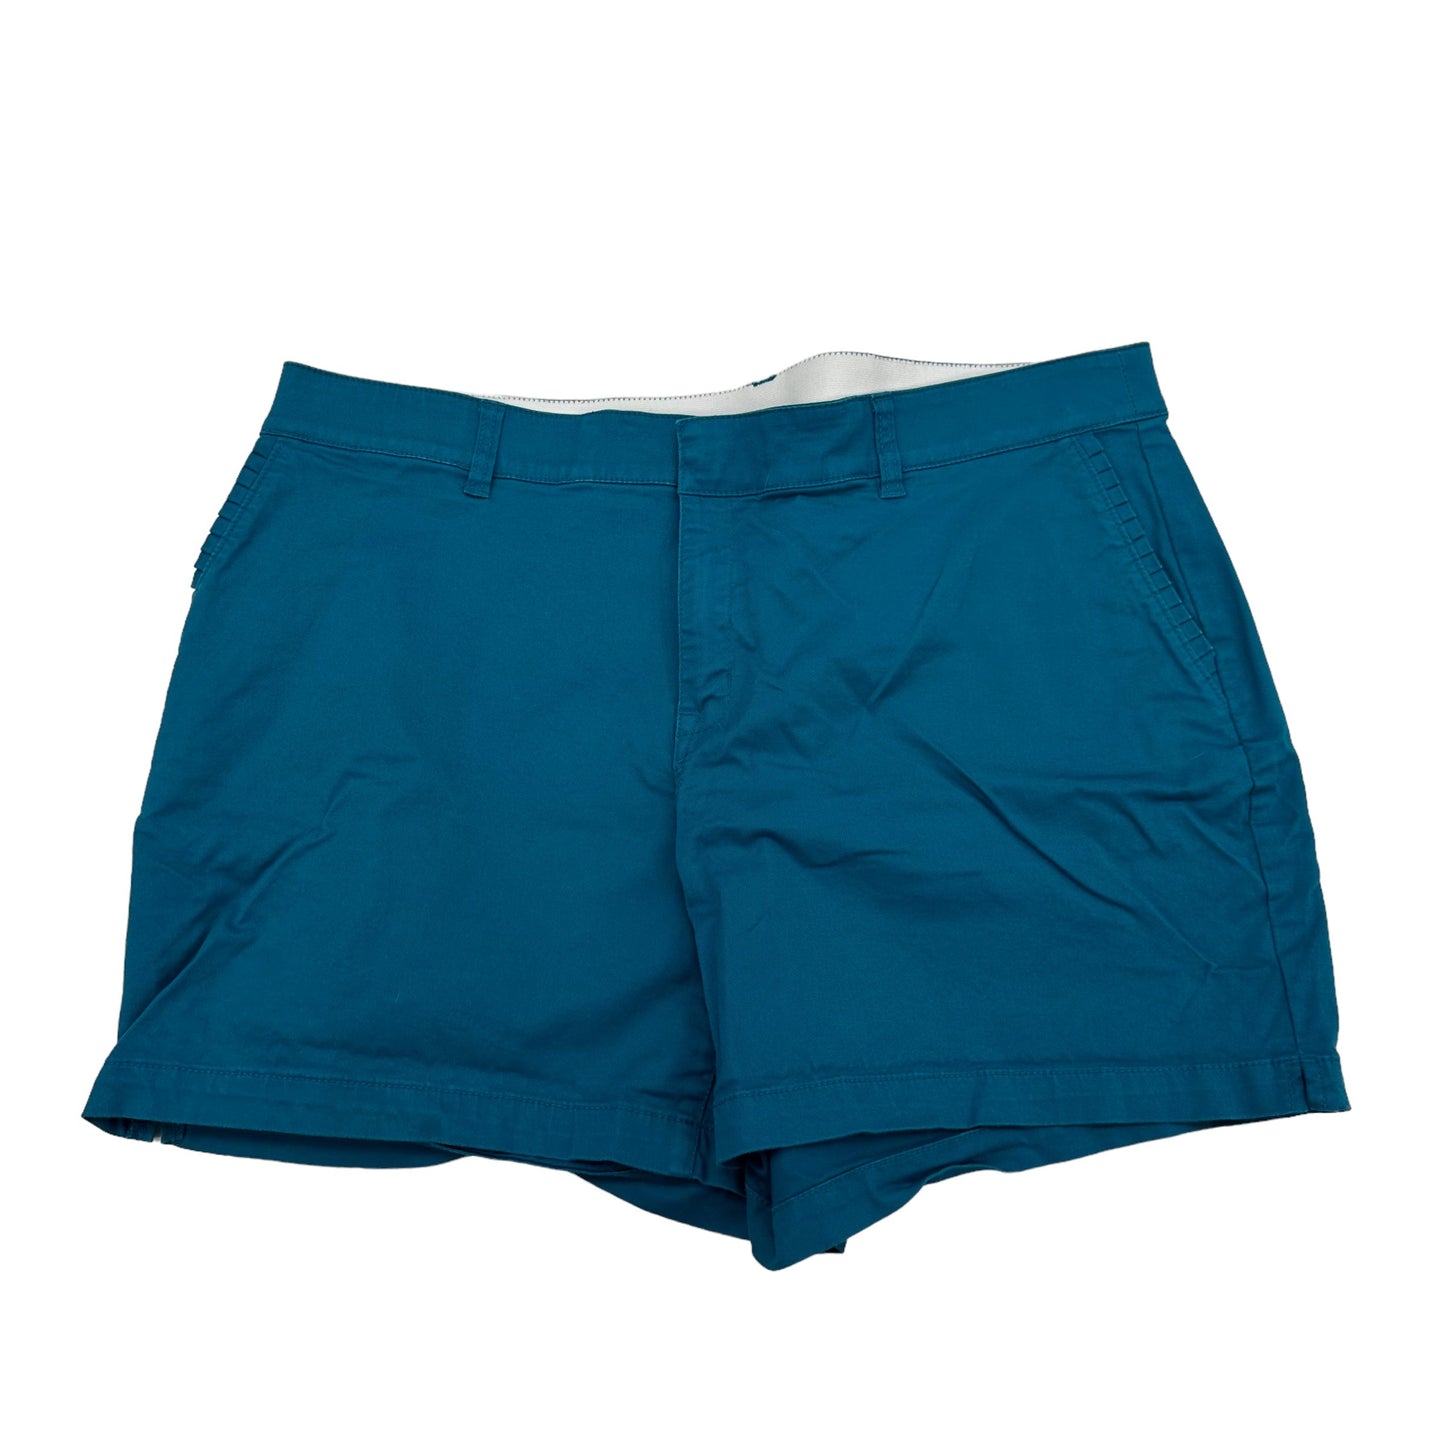 Shorts By Lane Bryant  Size: 18